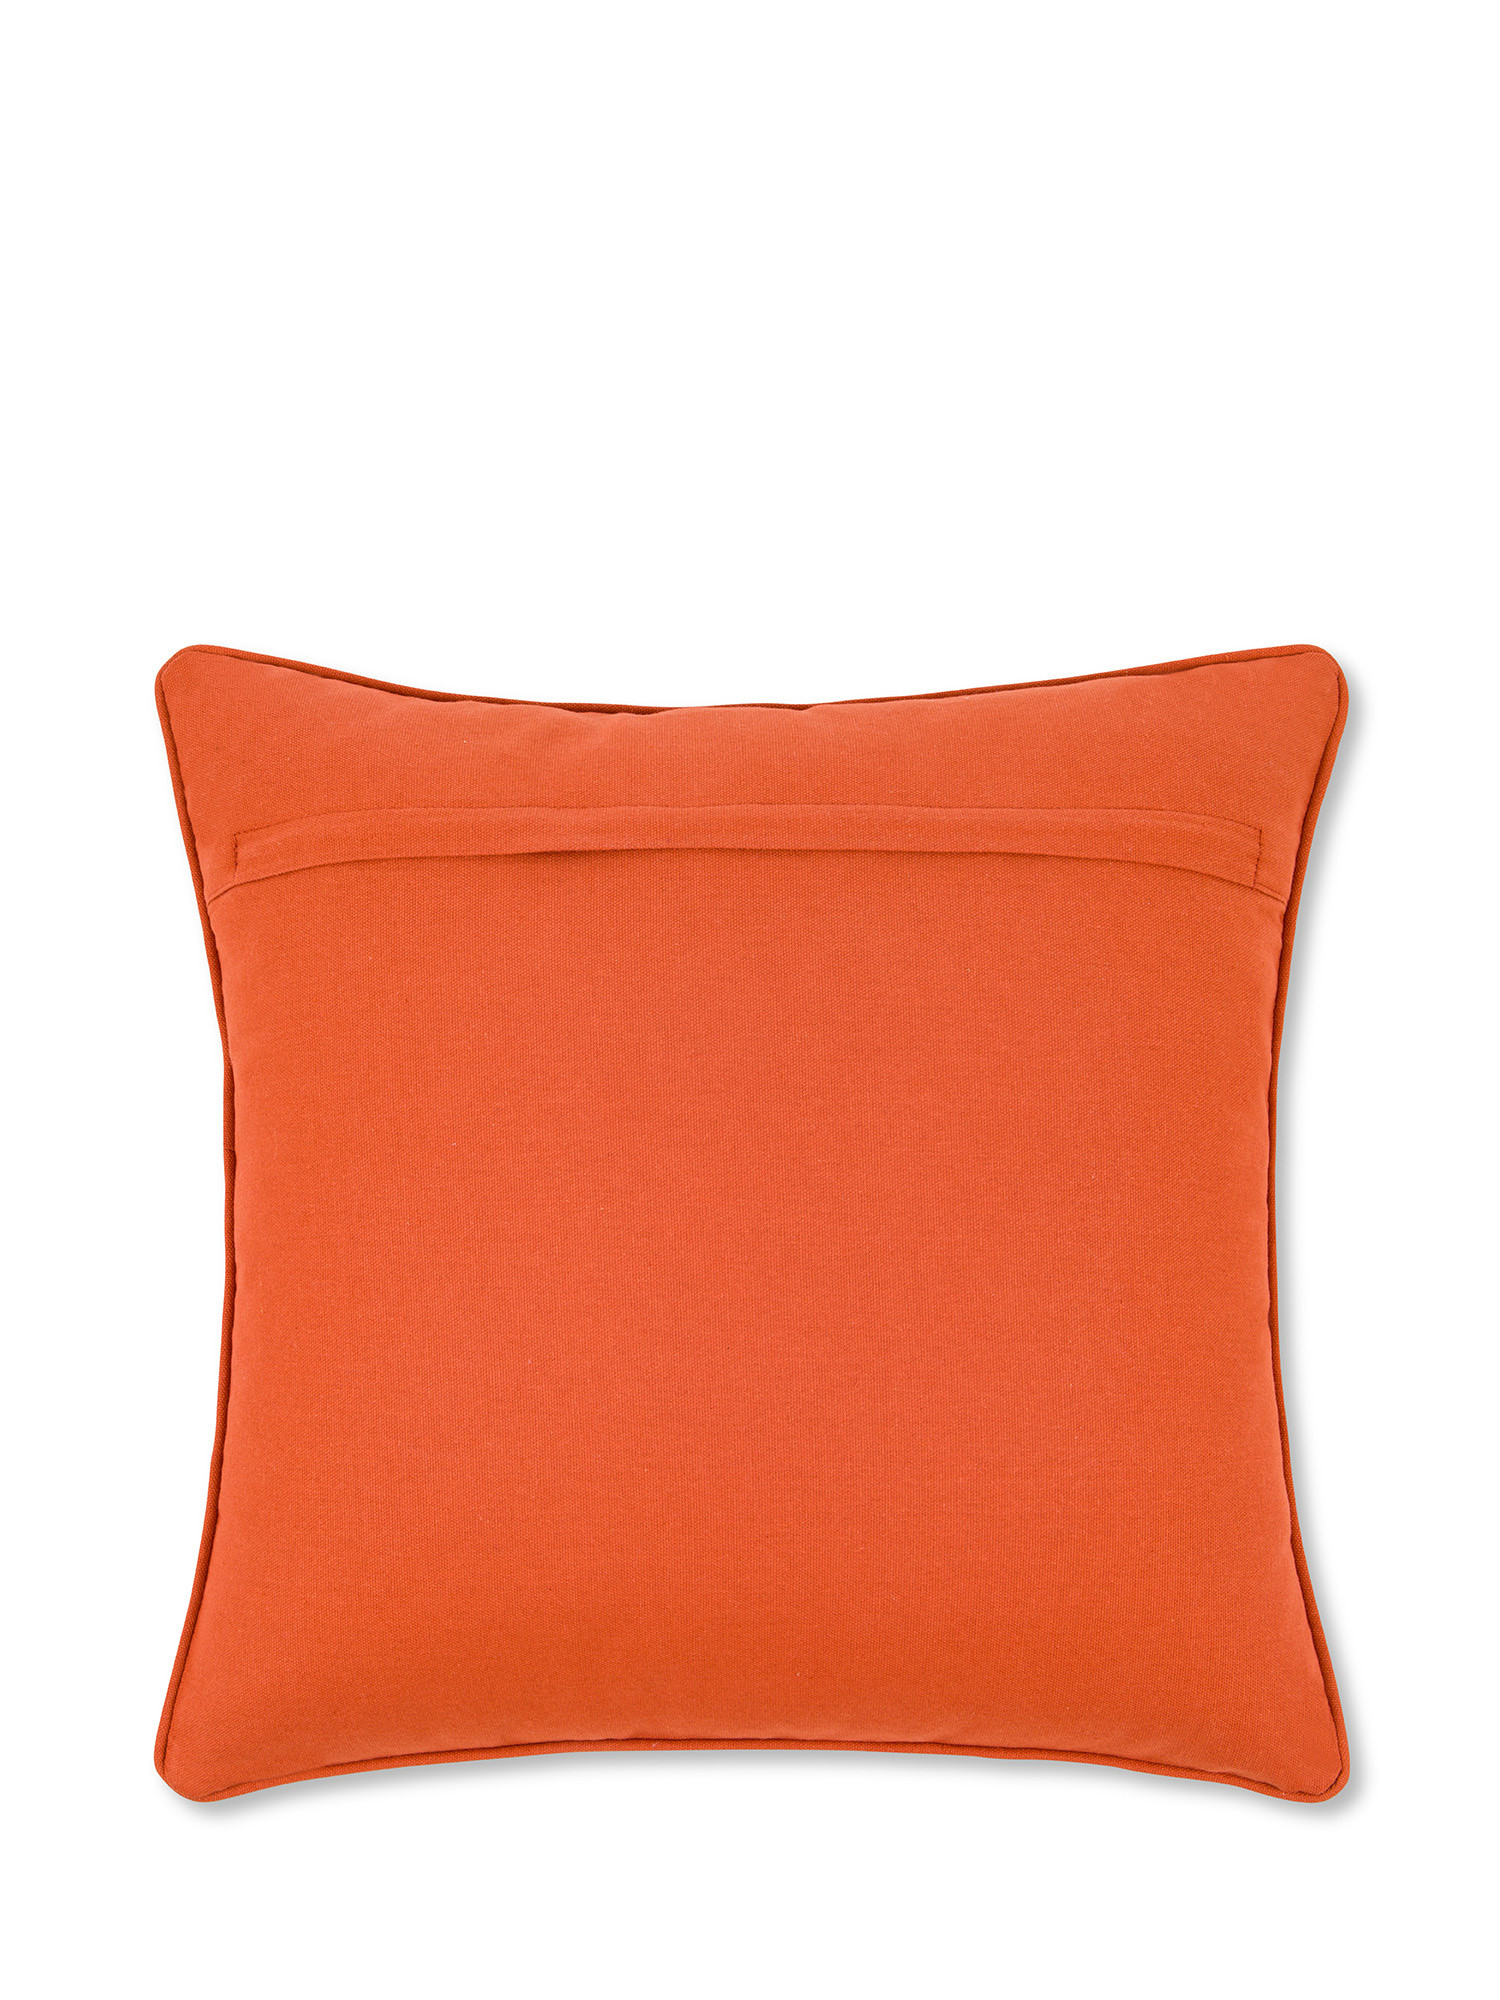 Cuscino ricamato con motivo vintage 45x45cm, Arancione, large image number 1